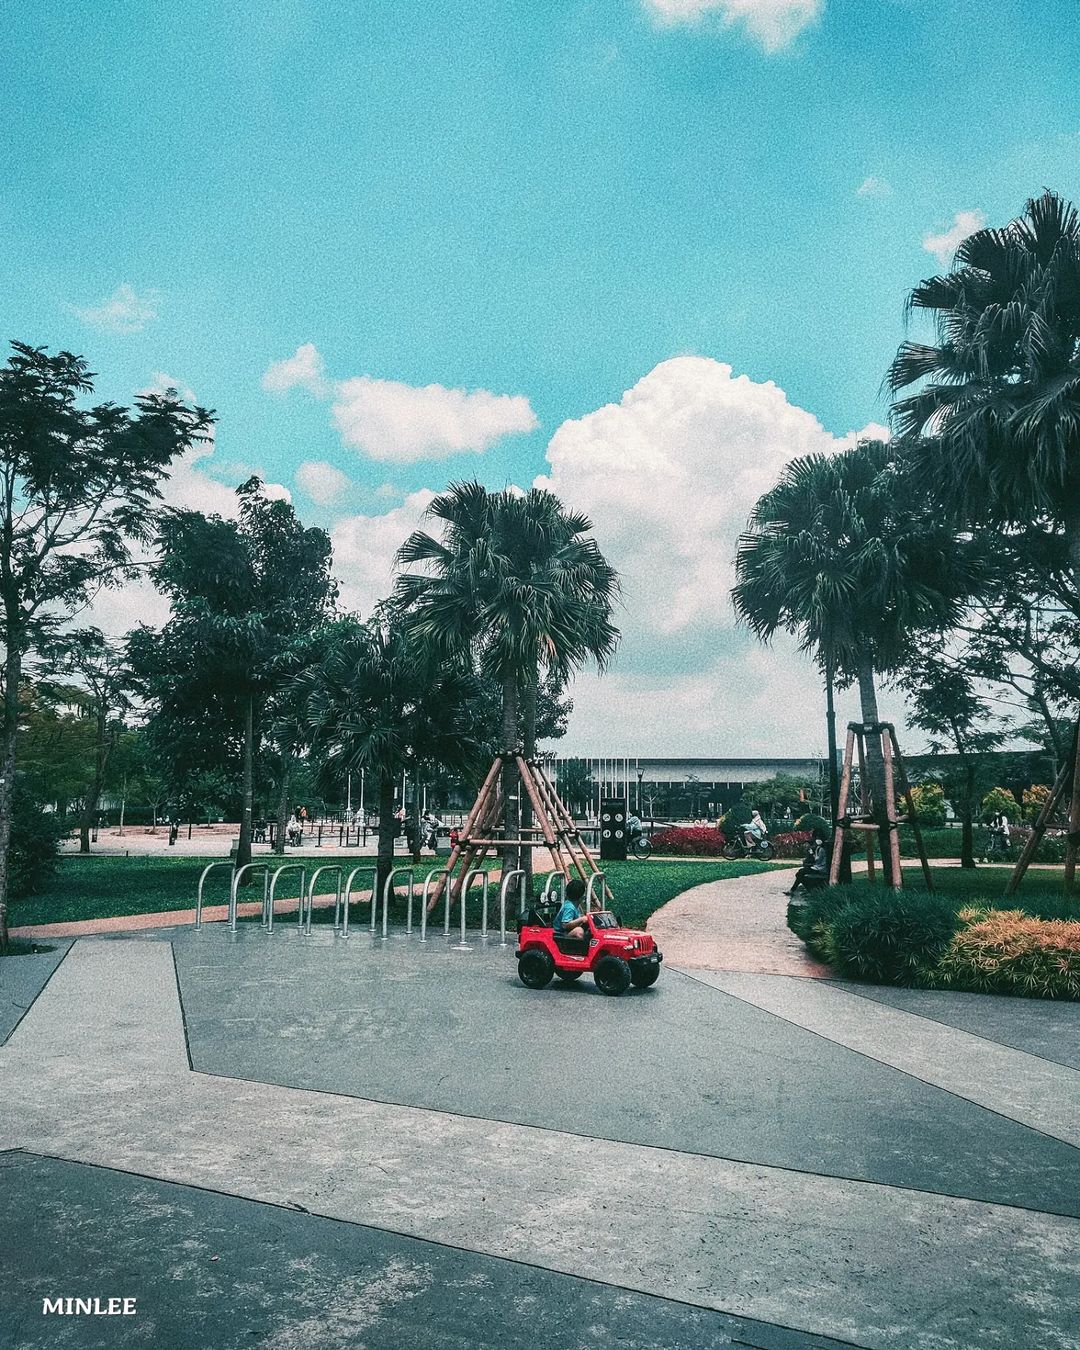 Jam Buka Kiara Artha Park Bandung Image From @minleemotret